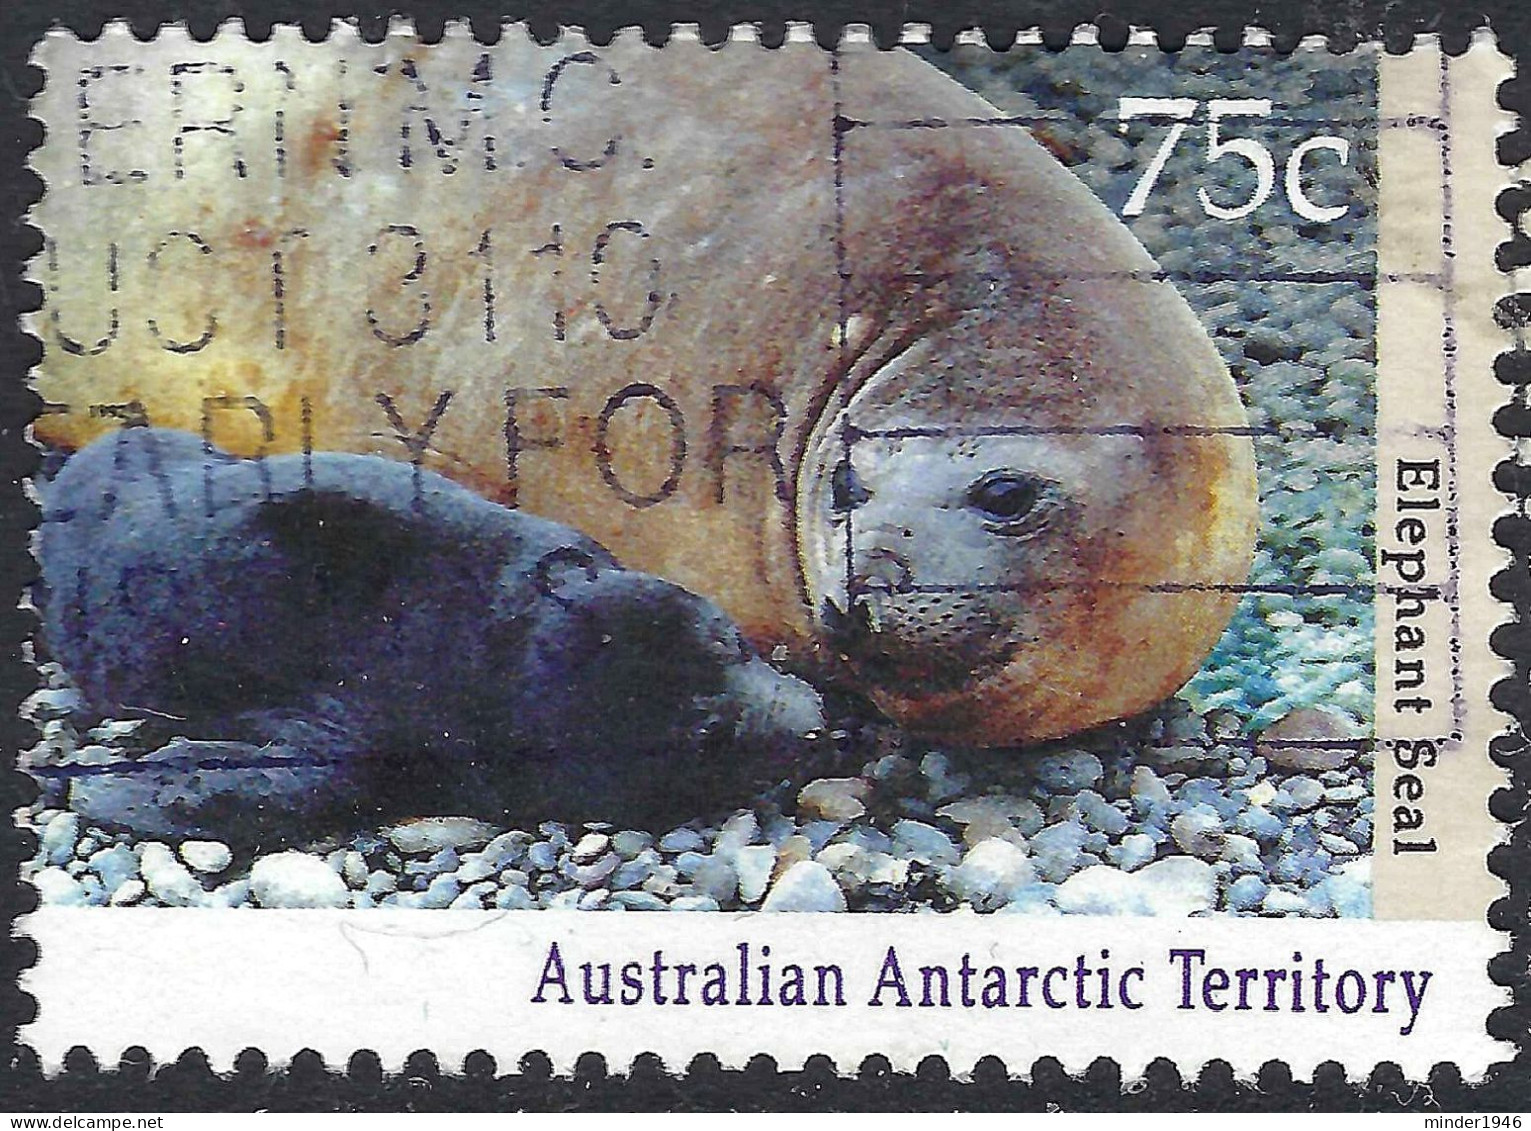 AUSTRALIAN ANTARCTIC TERRITORY (AAT) 1992 QEII 75c Multicoloured, Wildlife-Elephant Seal SG91 FU - Usados